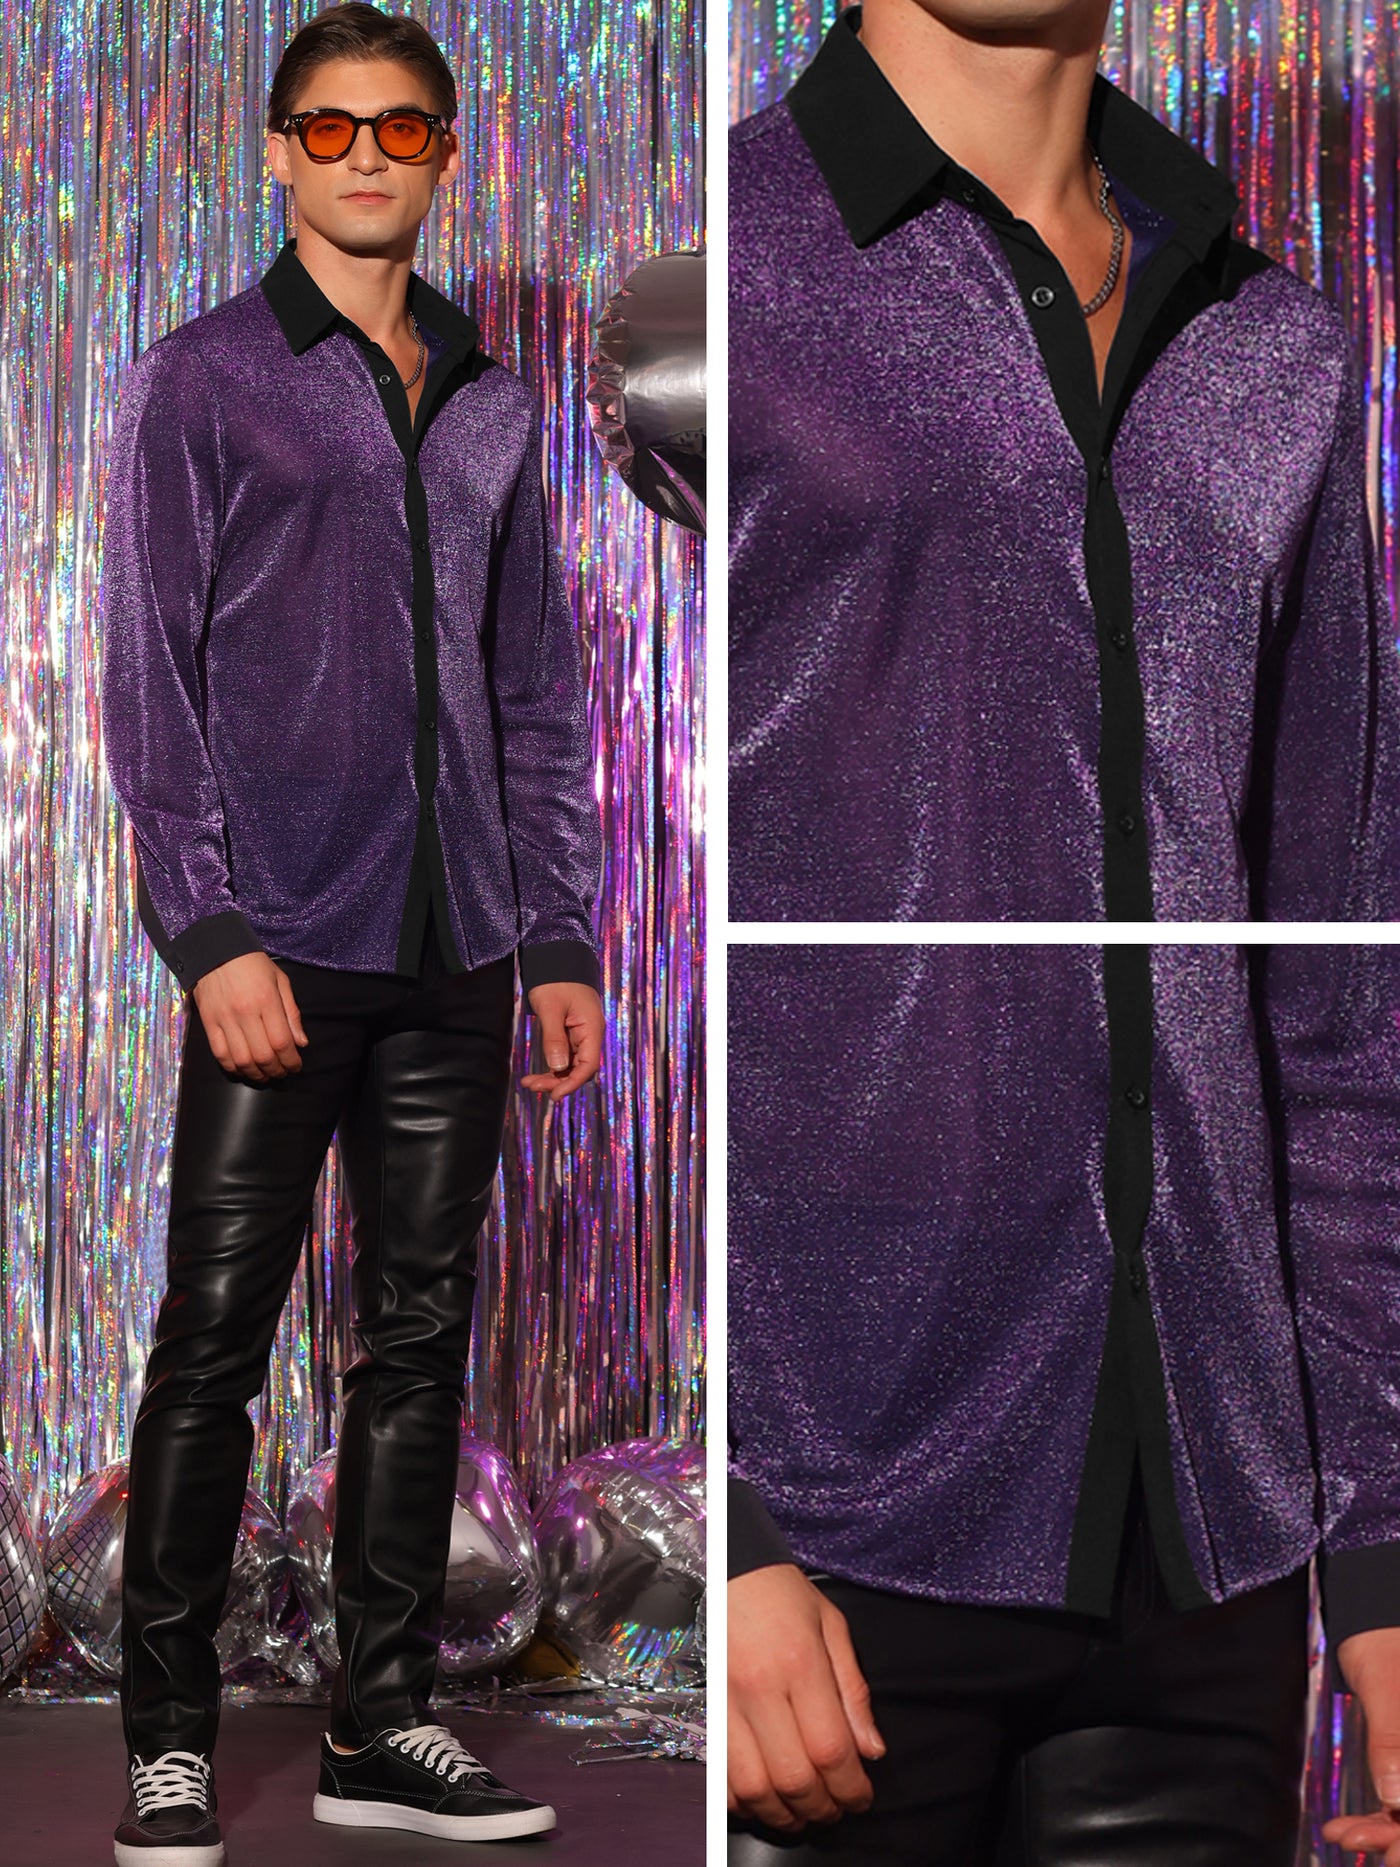 Bublédon Sparkle Dress Shirts for Men's Long Sleeves Party Shining Texture Shirt